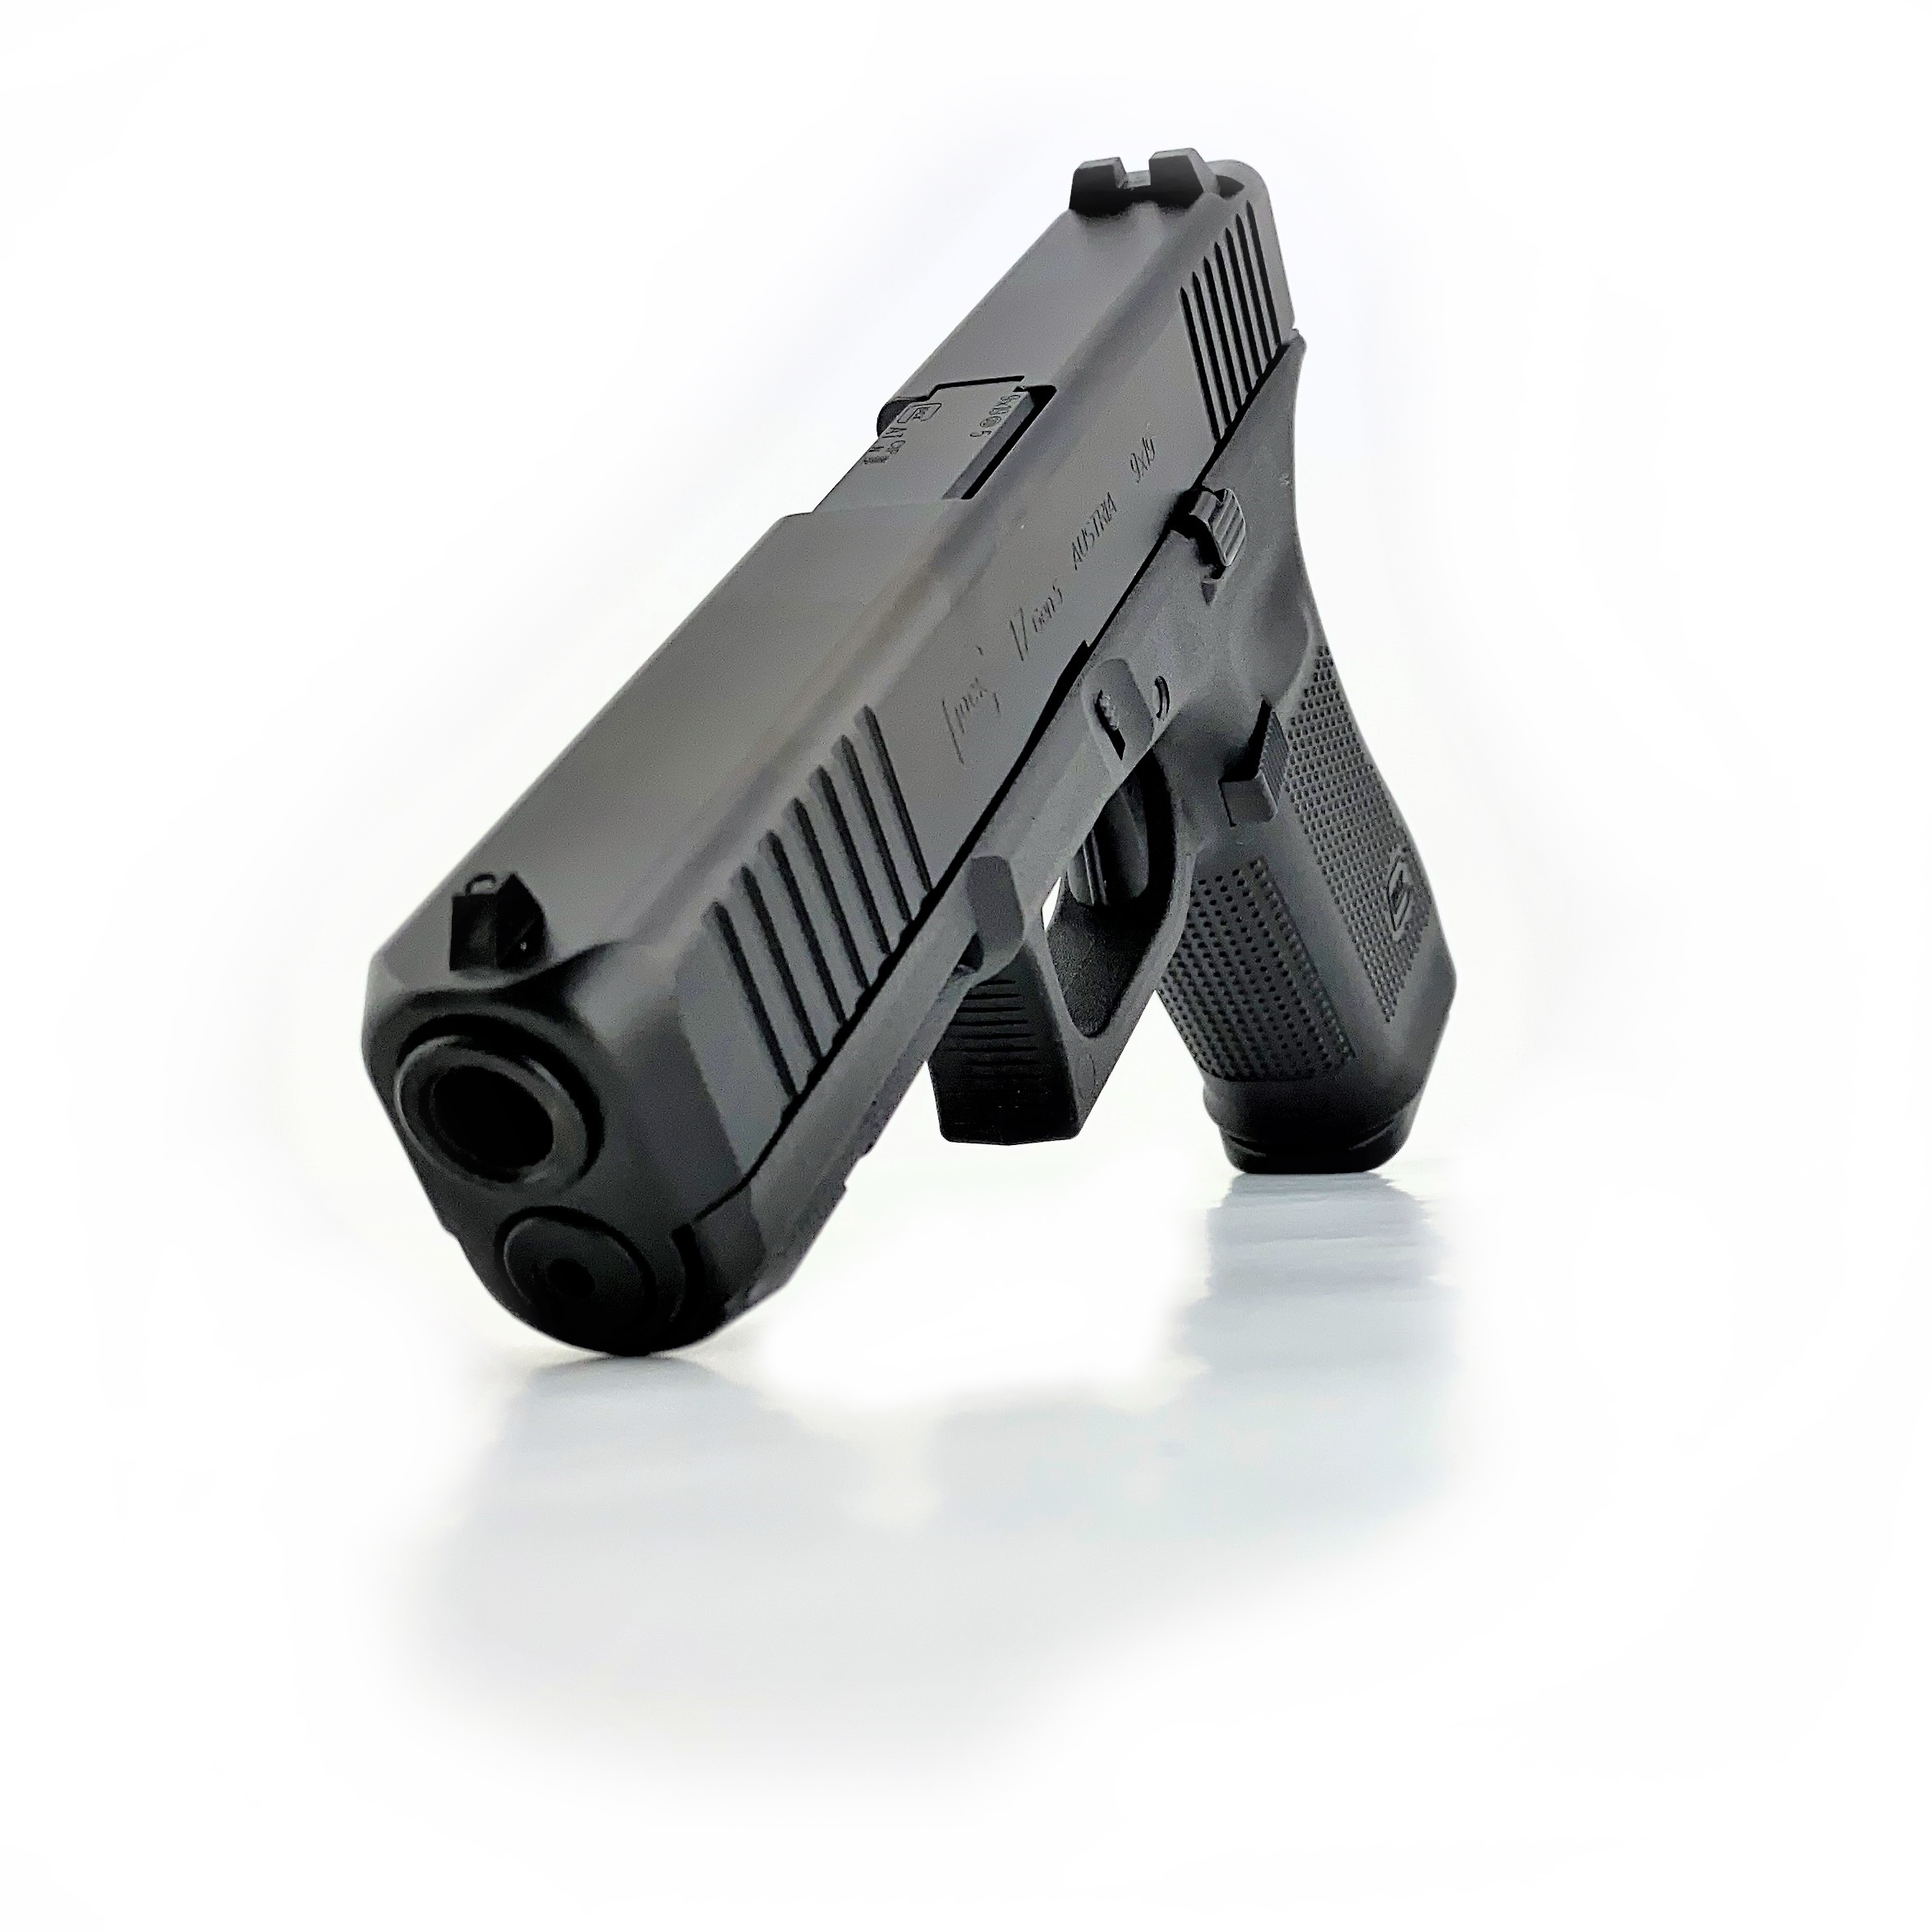 Glock 17 gen5 Kaliber 9mm Luger | F.A.S.T. Online